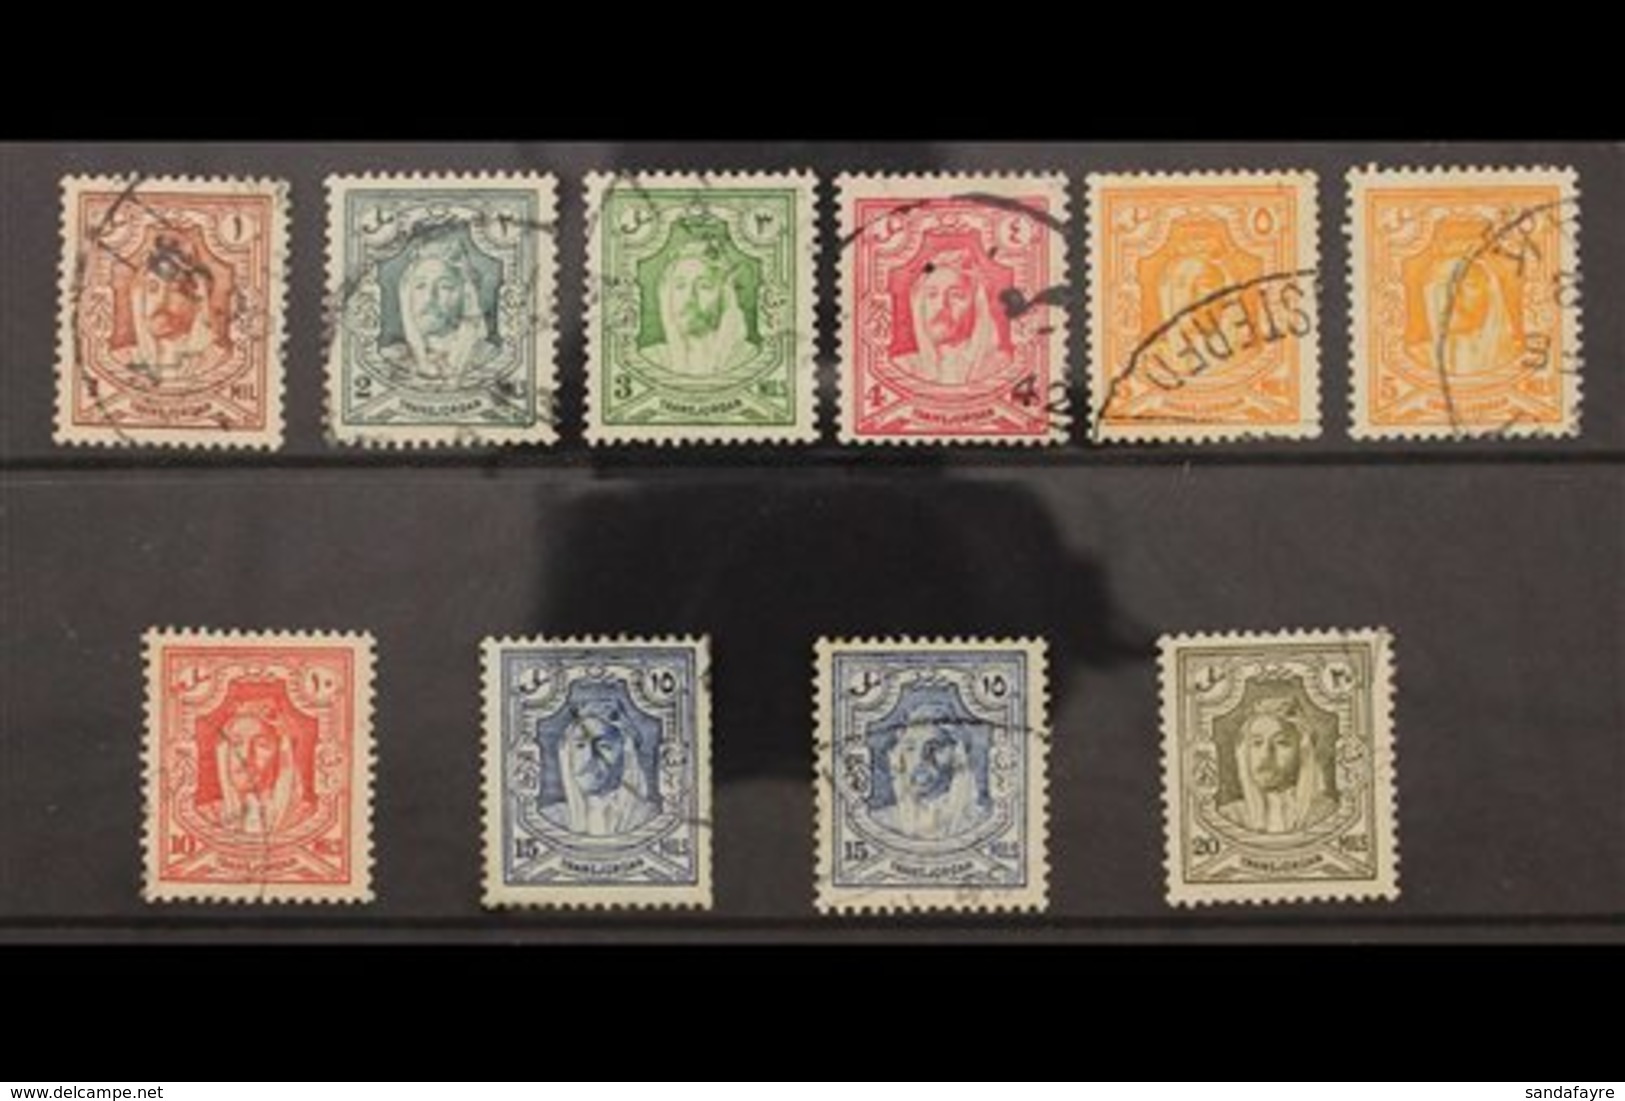 1930-39 PERF VARIANTS. Emir Complete Set Of Perforation Variants Inc All P13½ X13 & Coil P13½ X 14, SG 194c, 195a, 196ab - Jordania